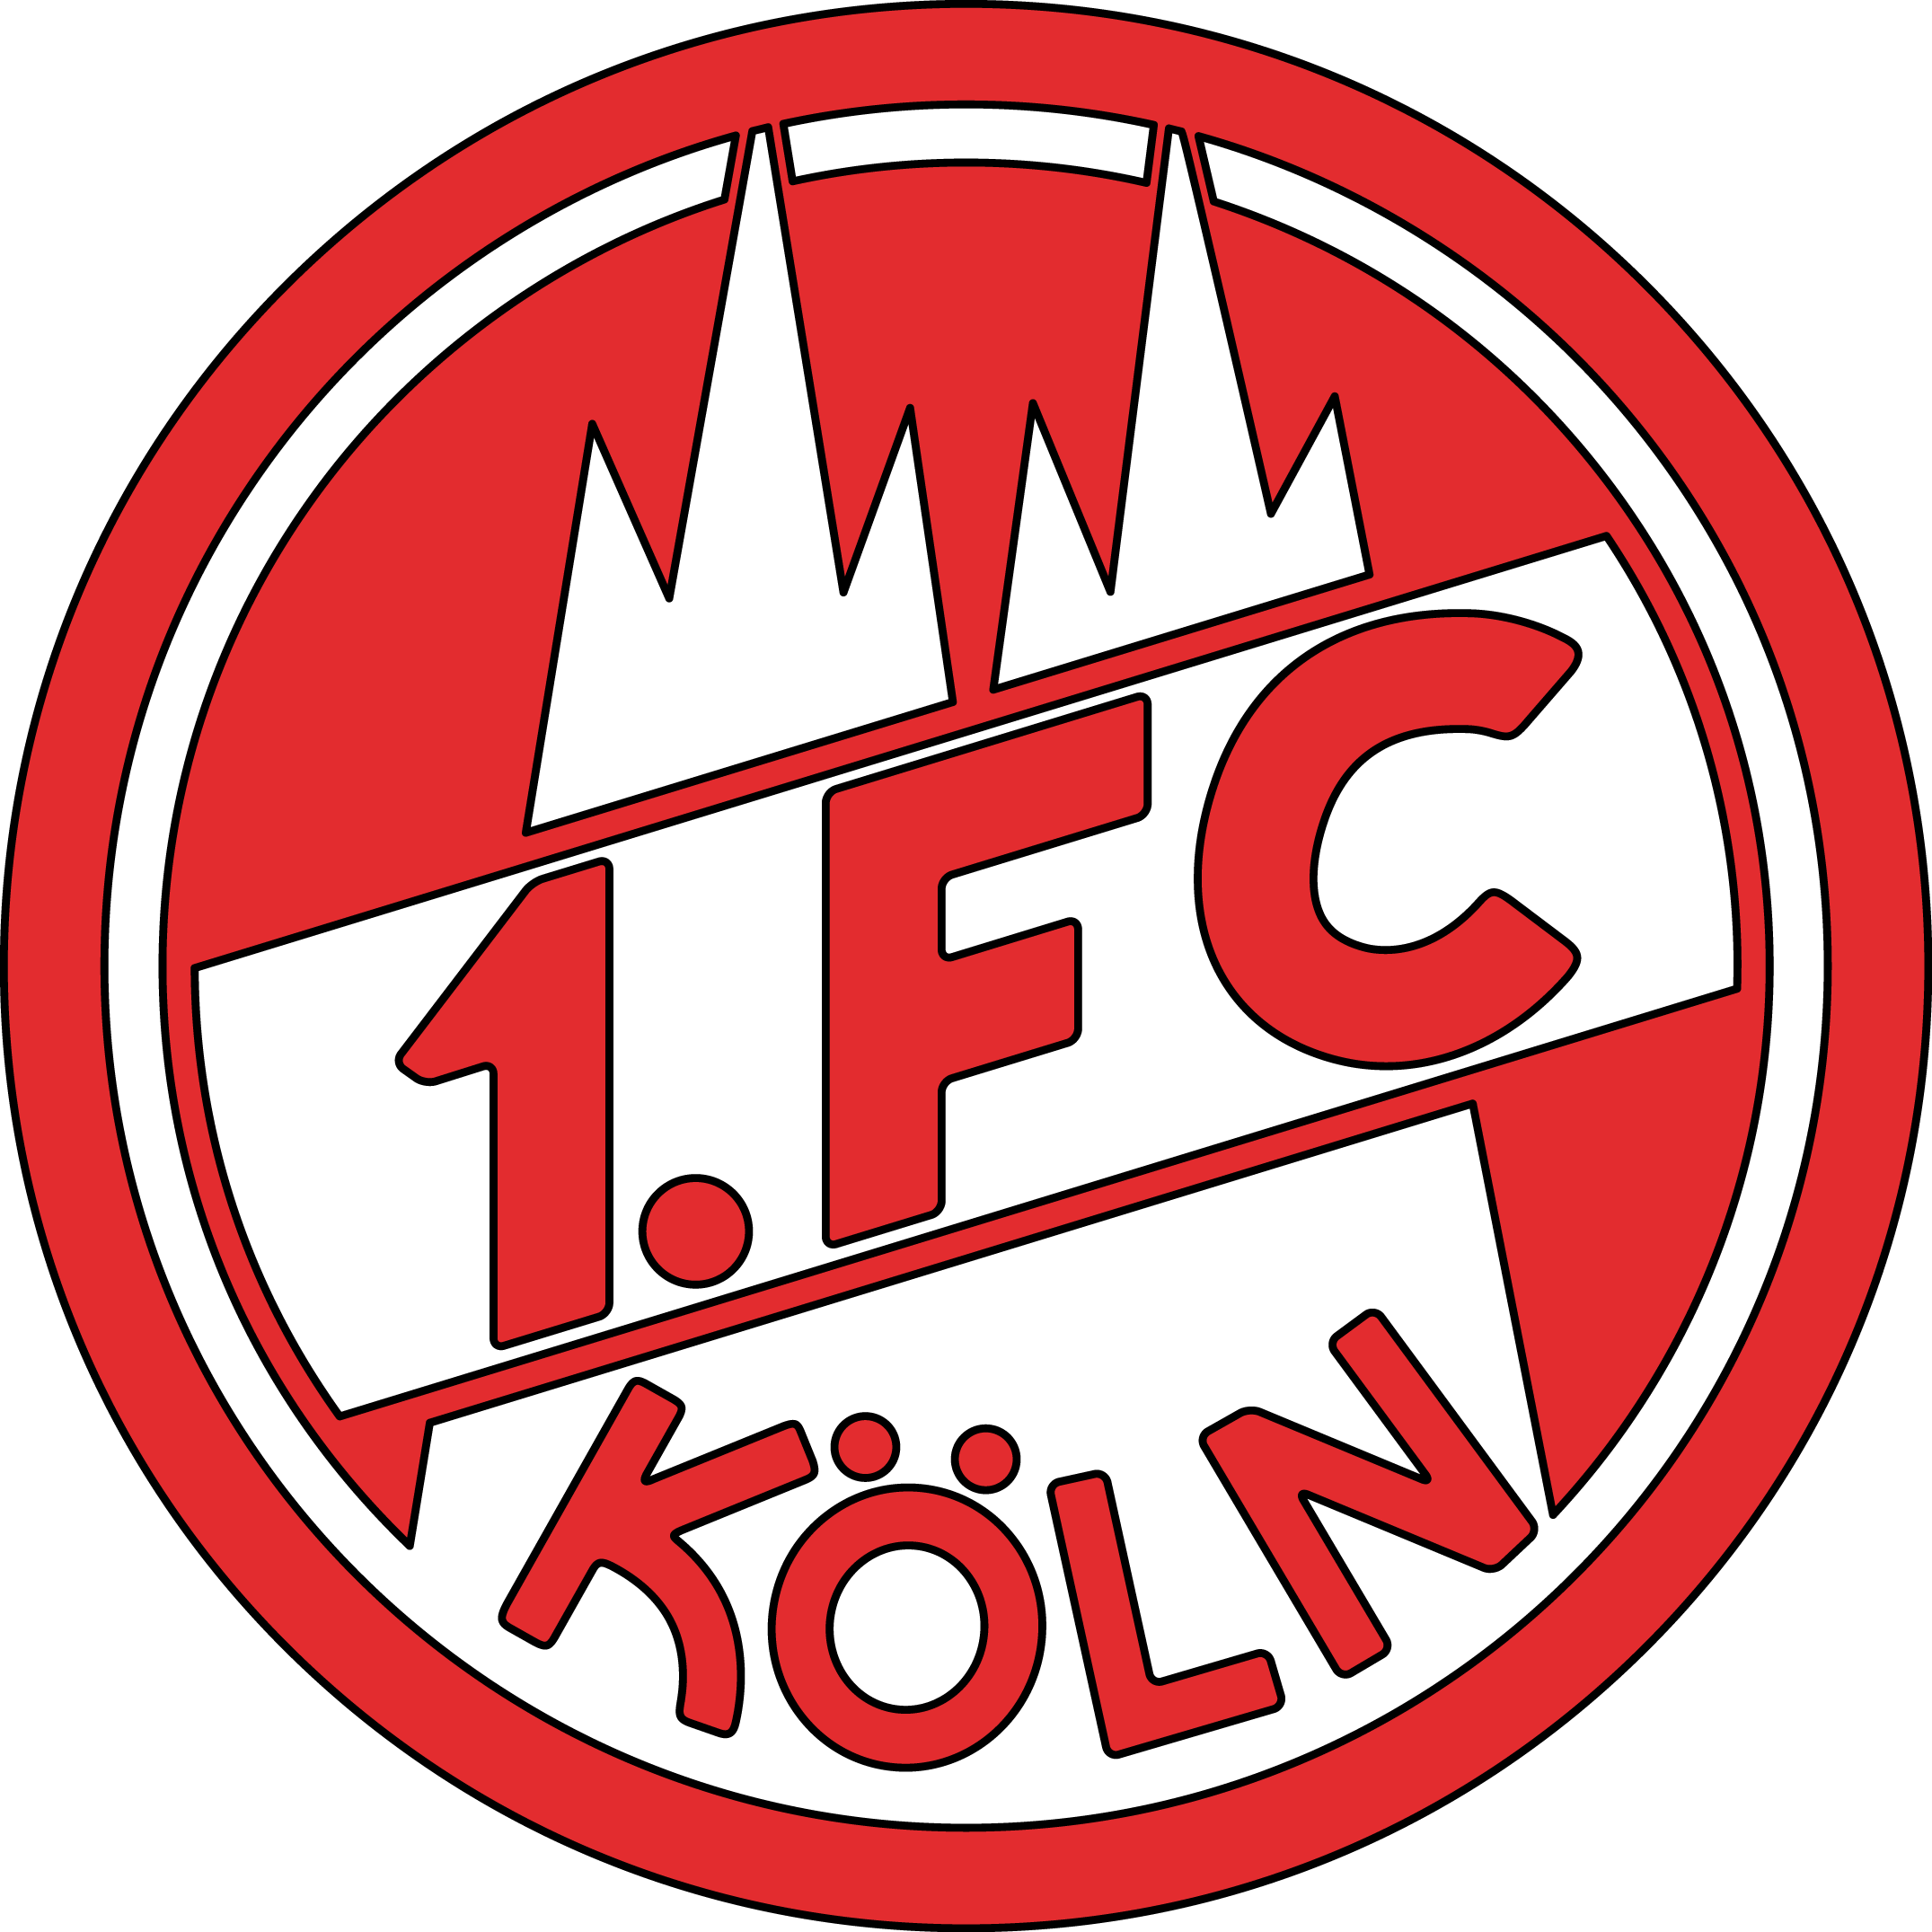 1 Fc Koln Logo Logodix